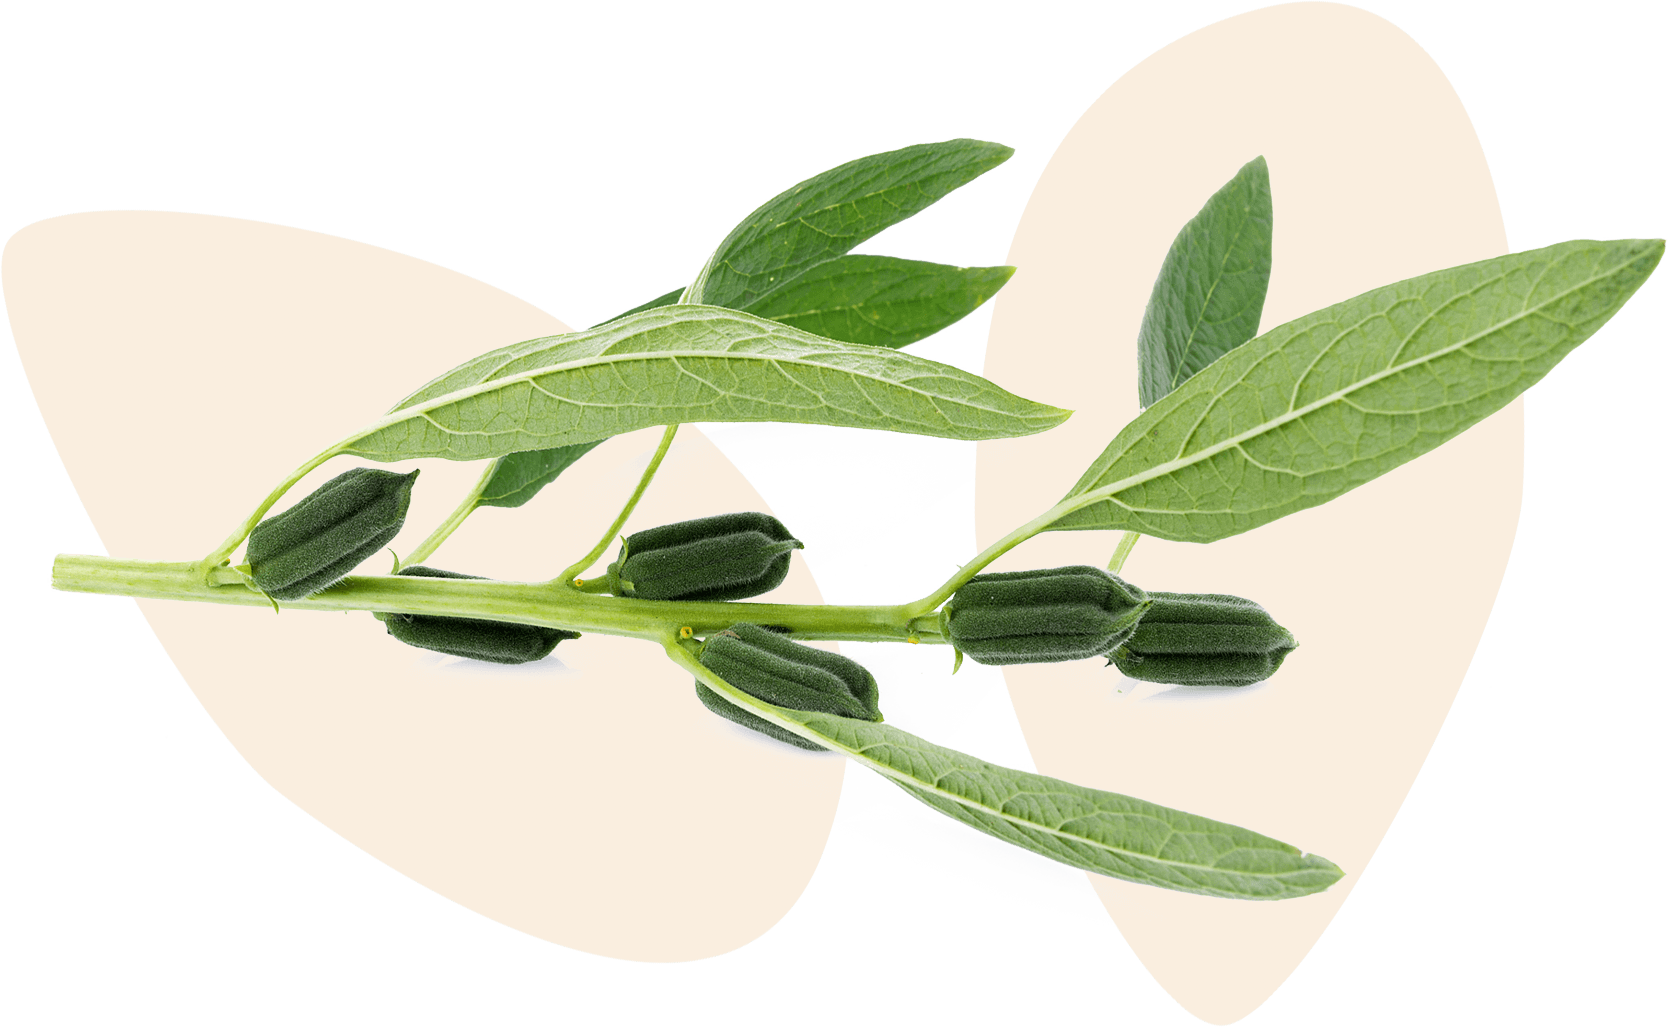 sesame plant